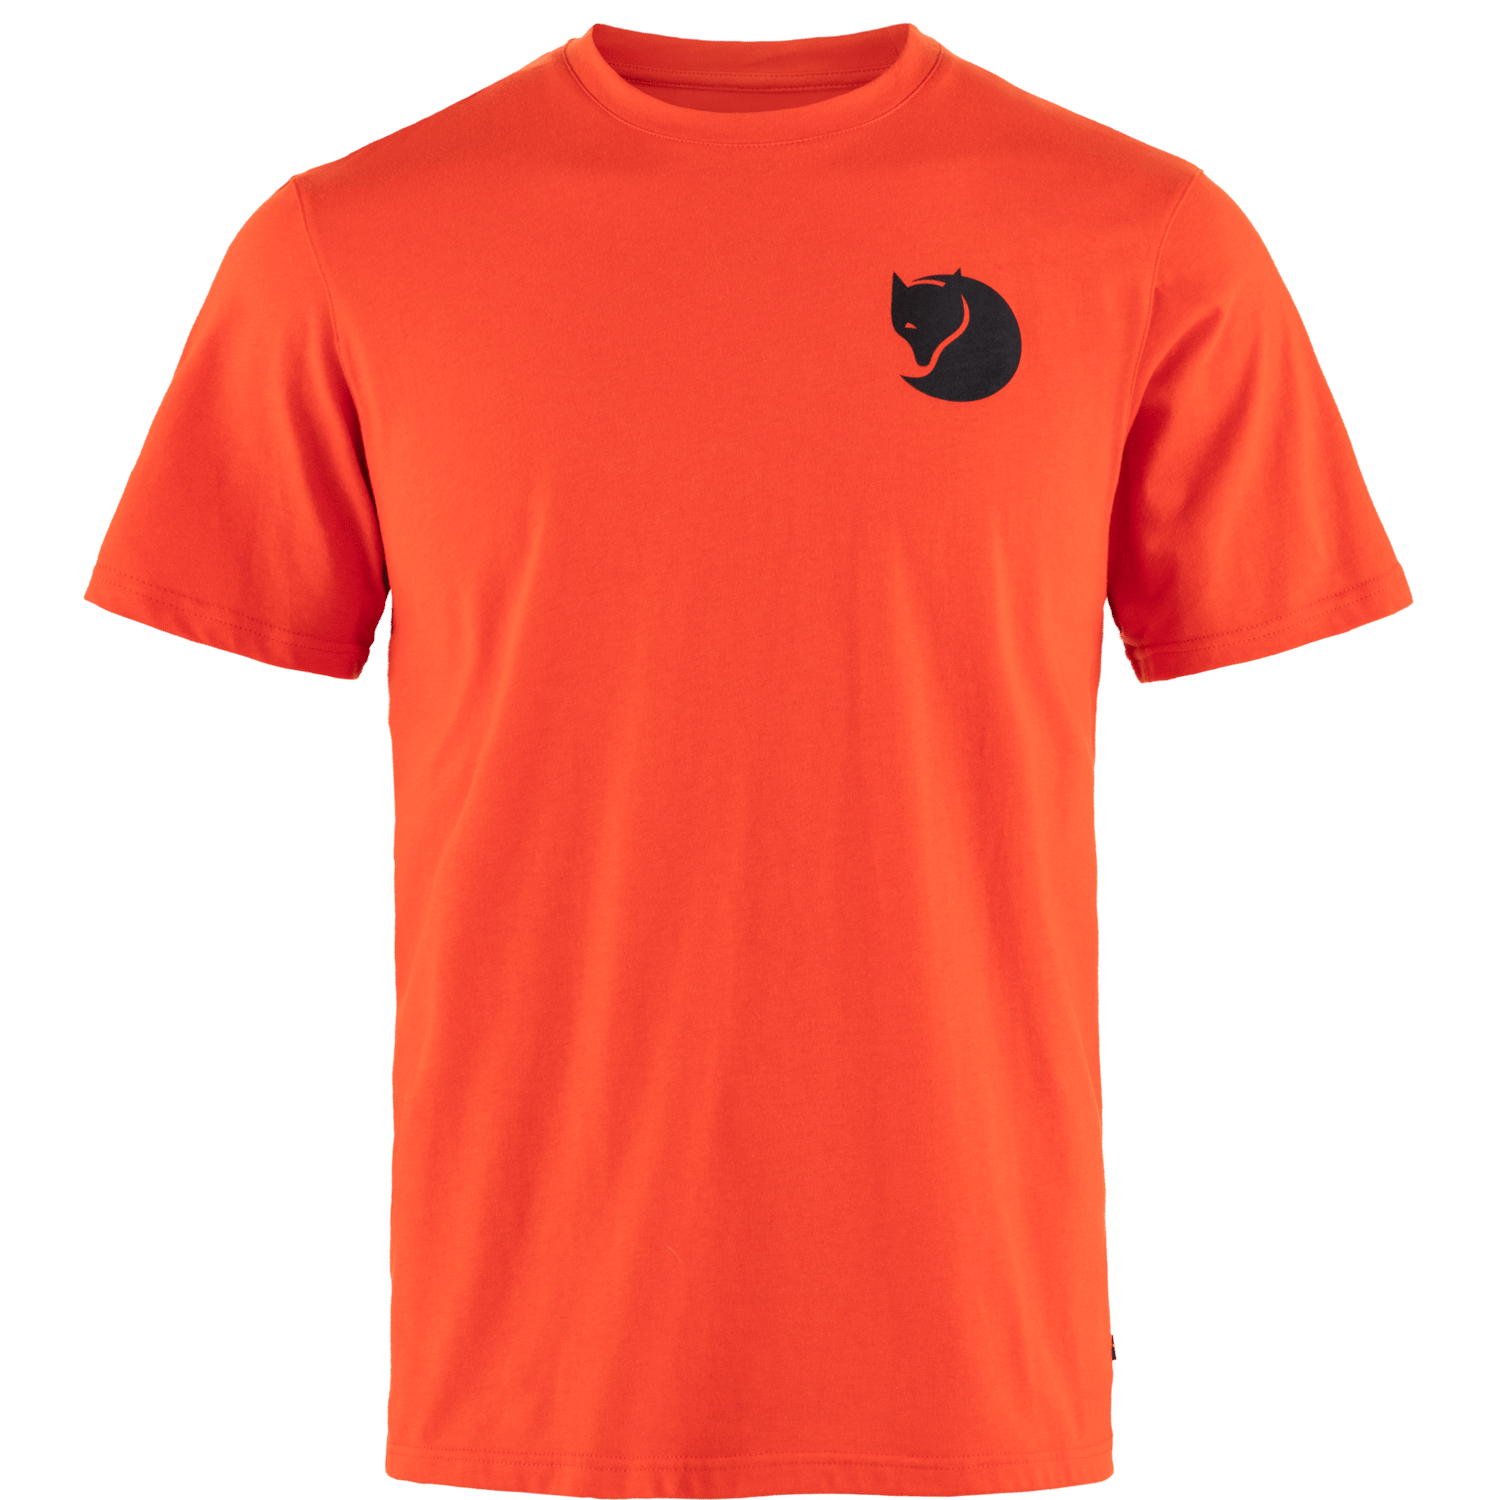 Fjällräven Walk With Nature T-Shirt M Flame Orange